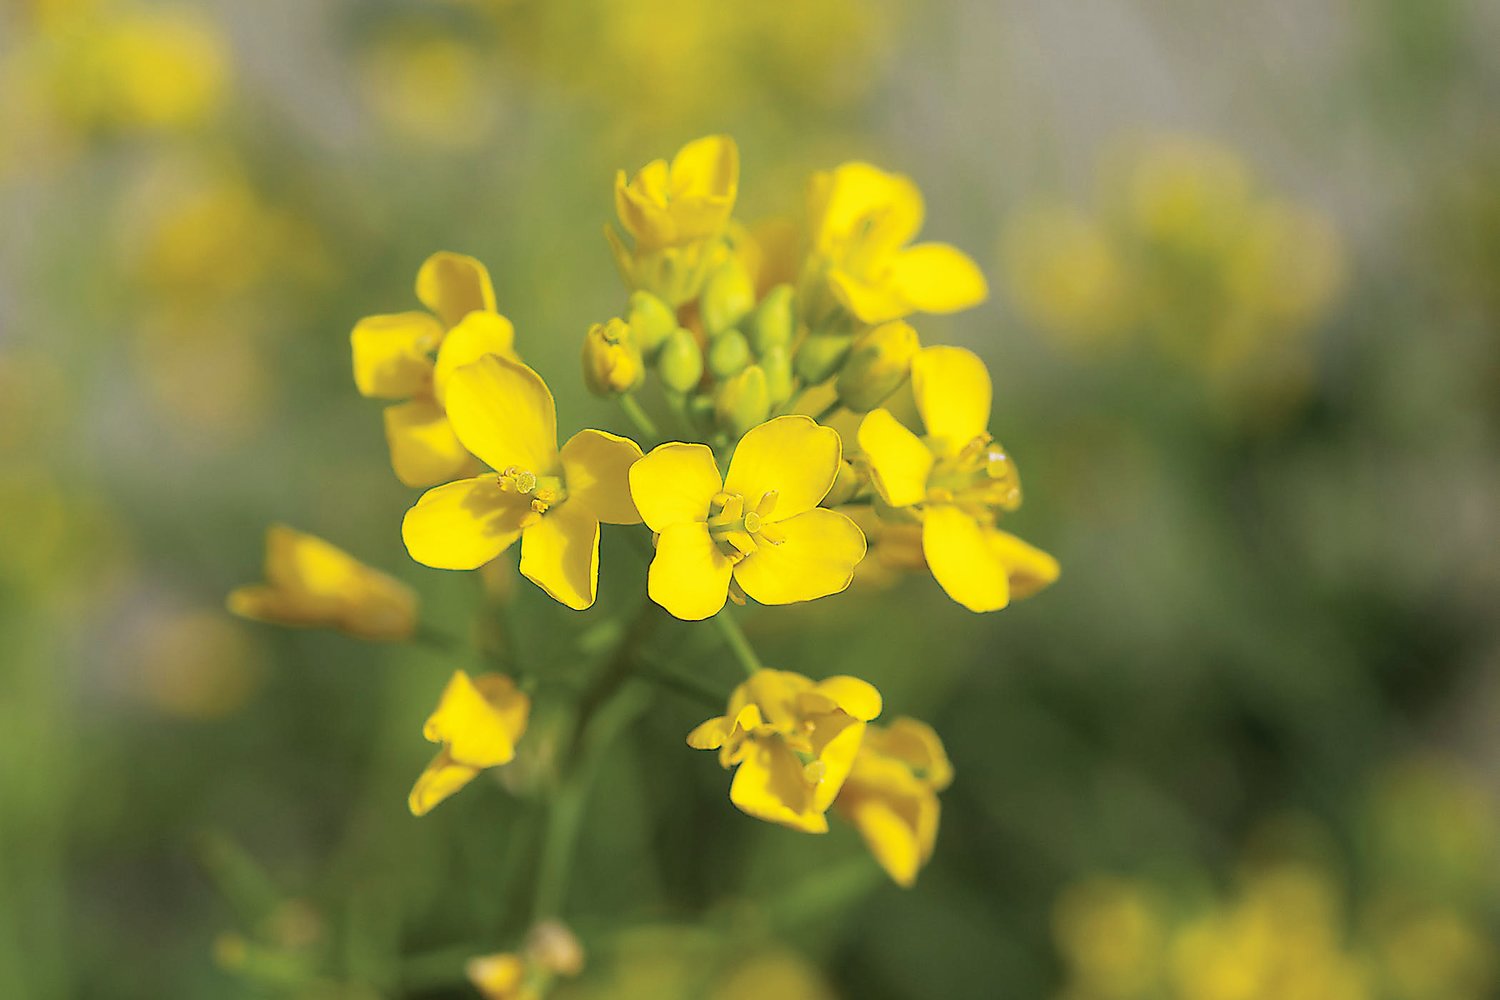 Wild mustard blooms in spring in local fields.